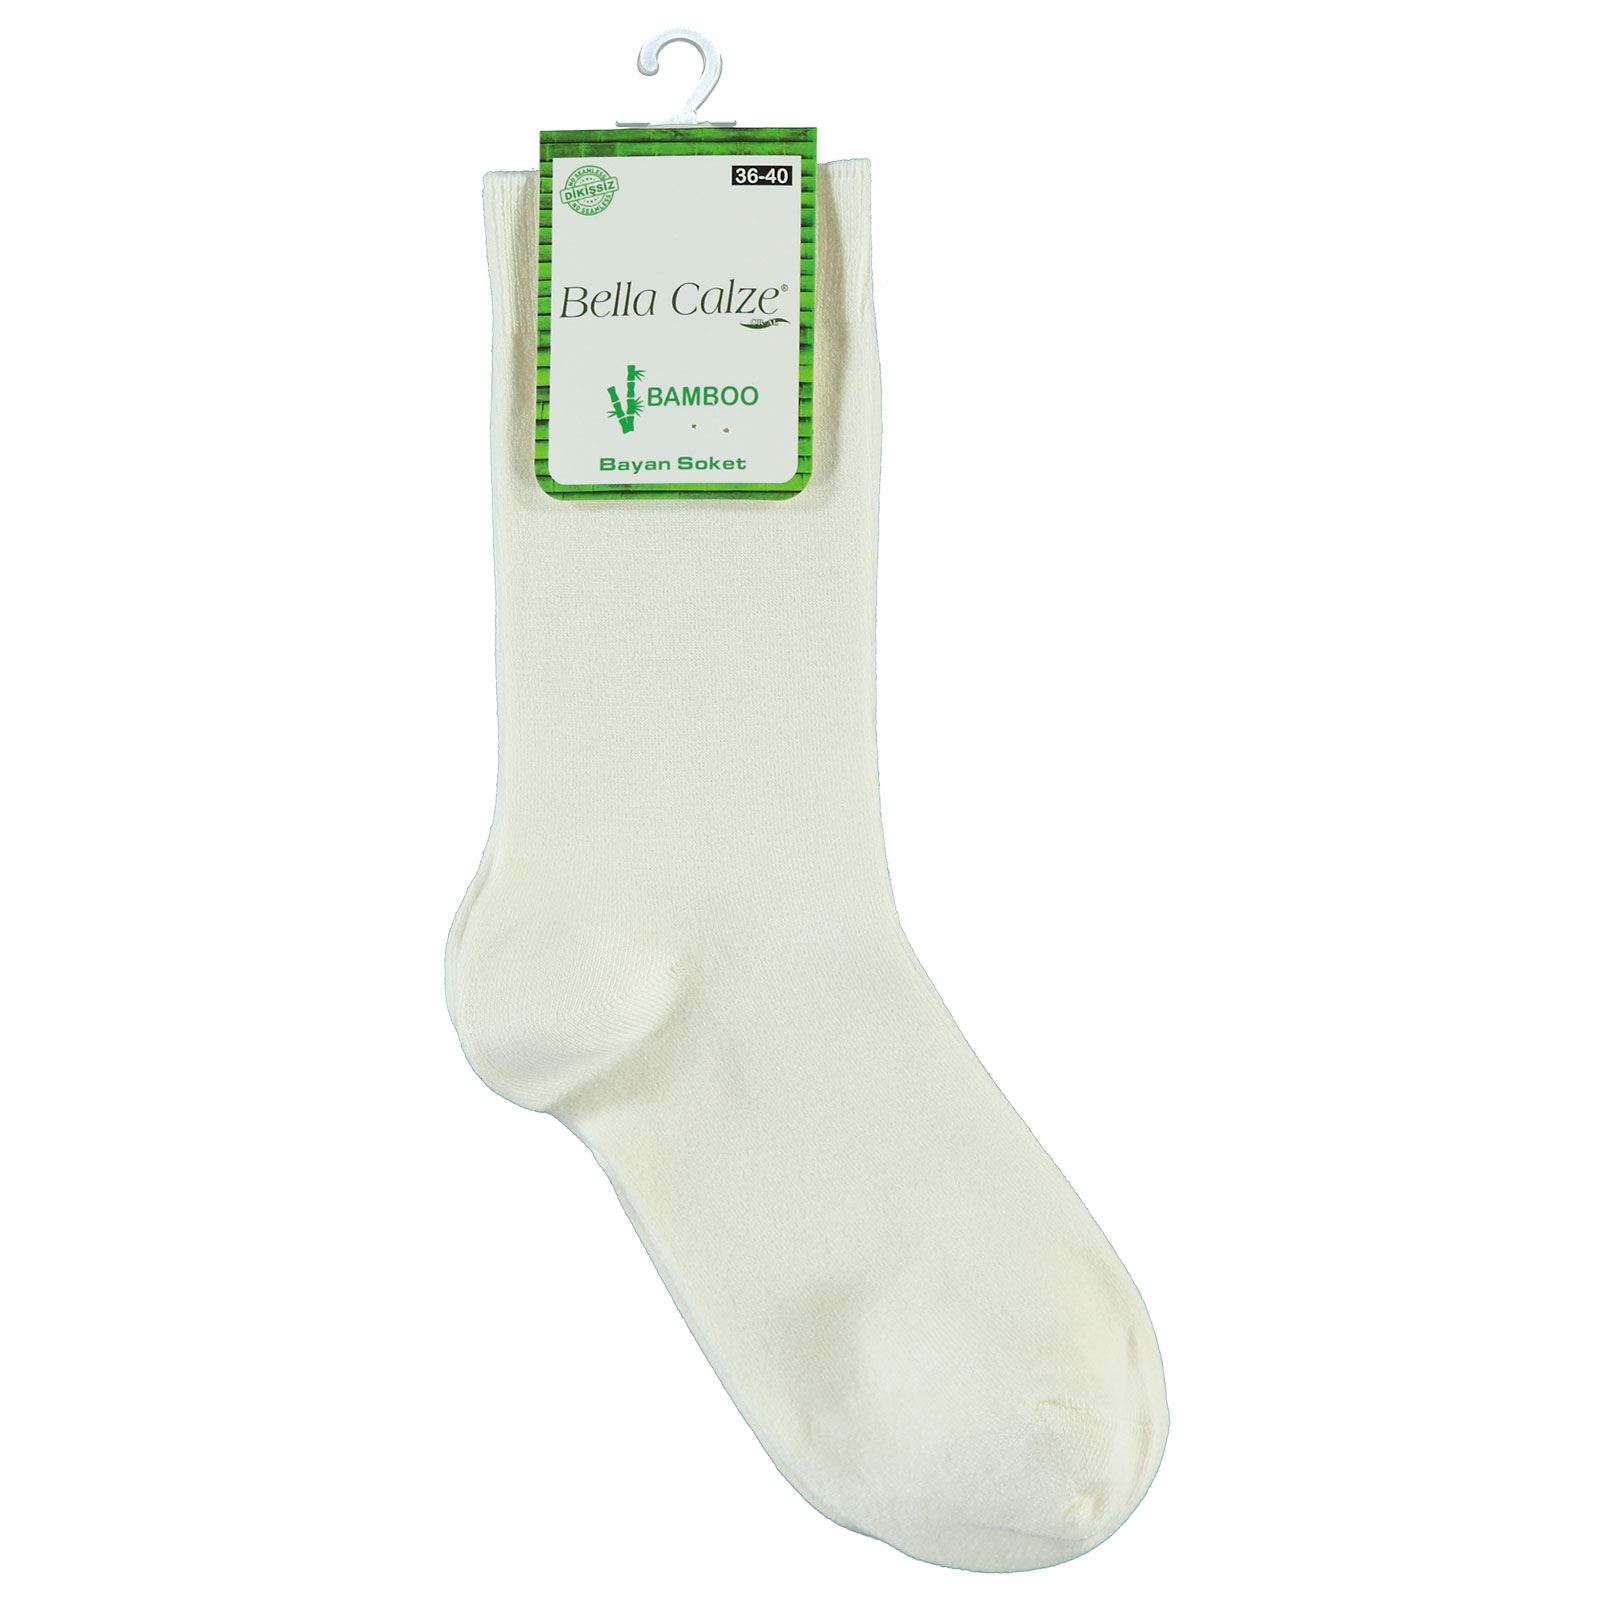 Bella Calze Kız Çocuk Bambu Soket Çorap 36-40 Numara Ekru